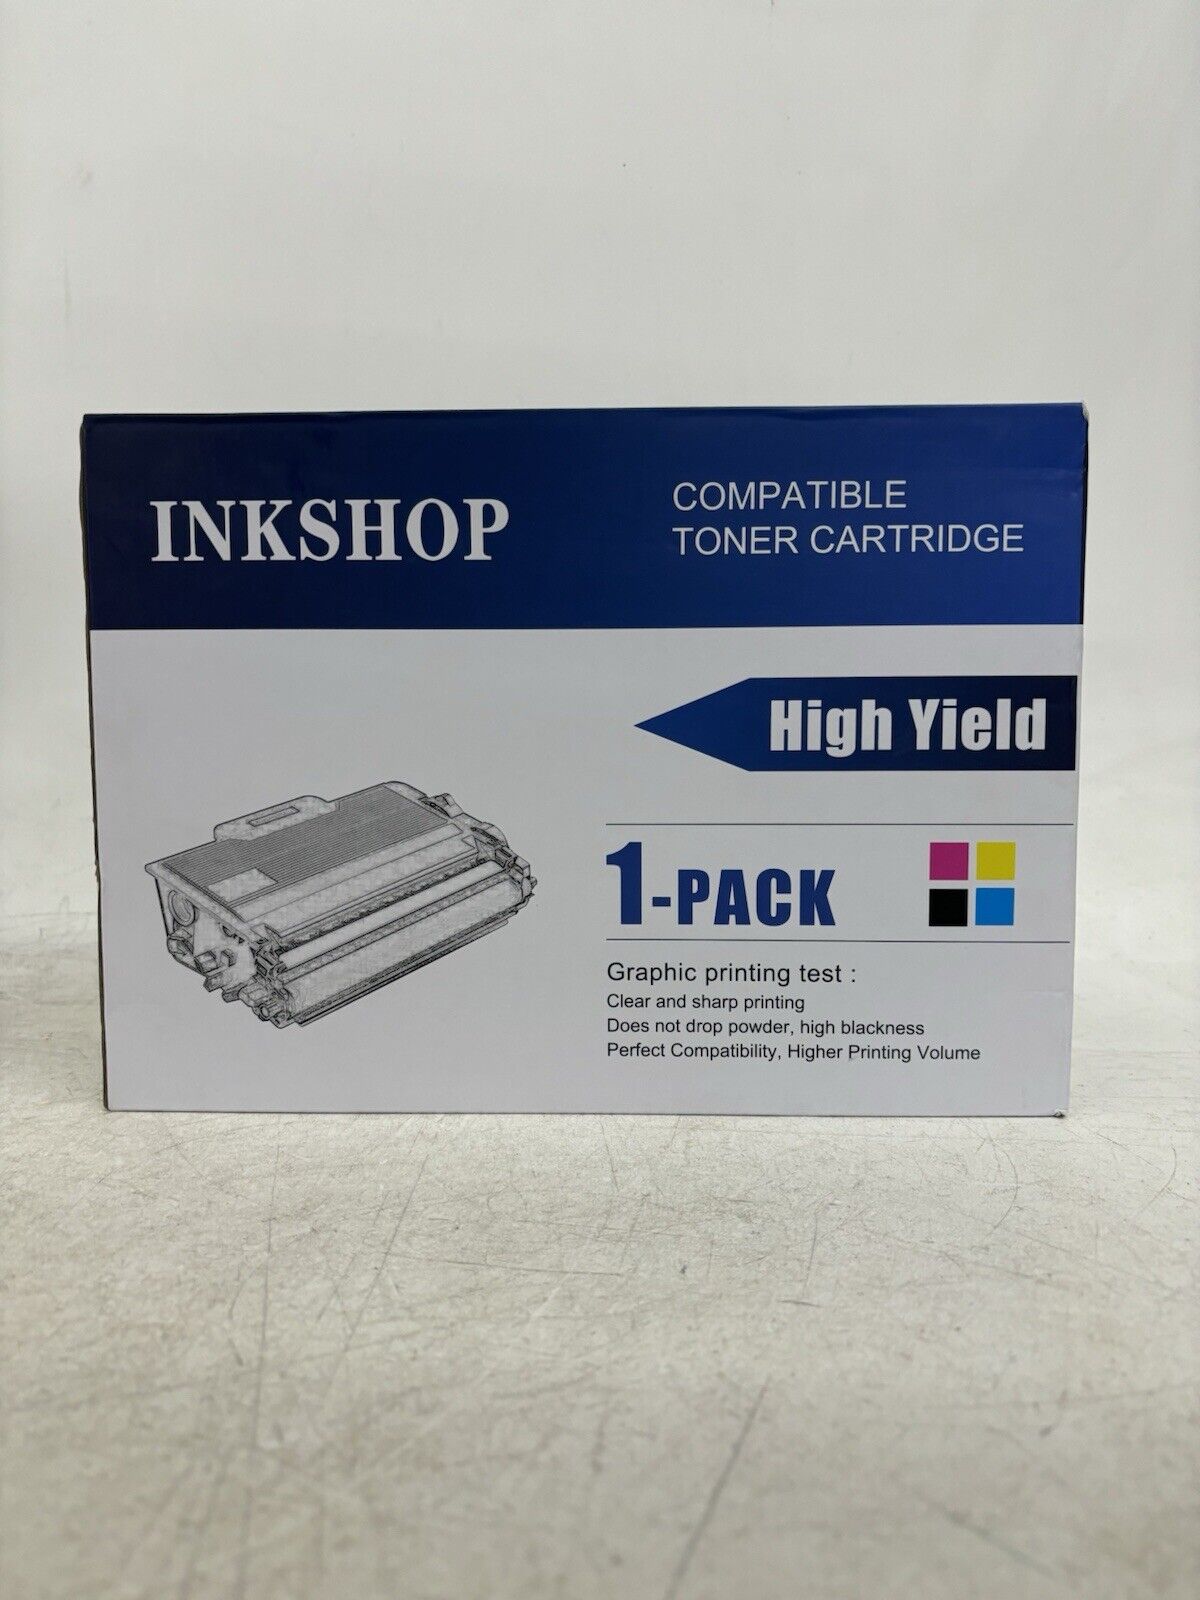 INKSHOP Compatible Toner Cartridge - 1 pack tn650